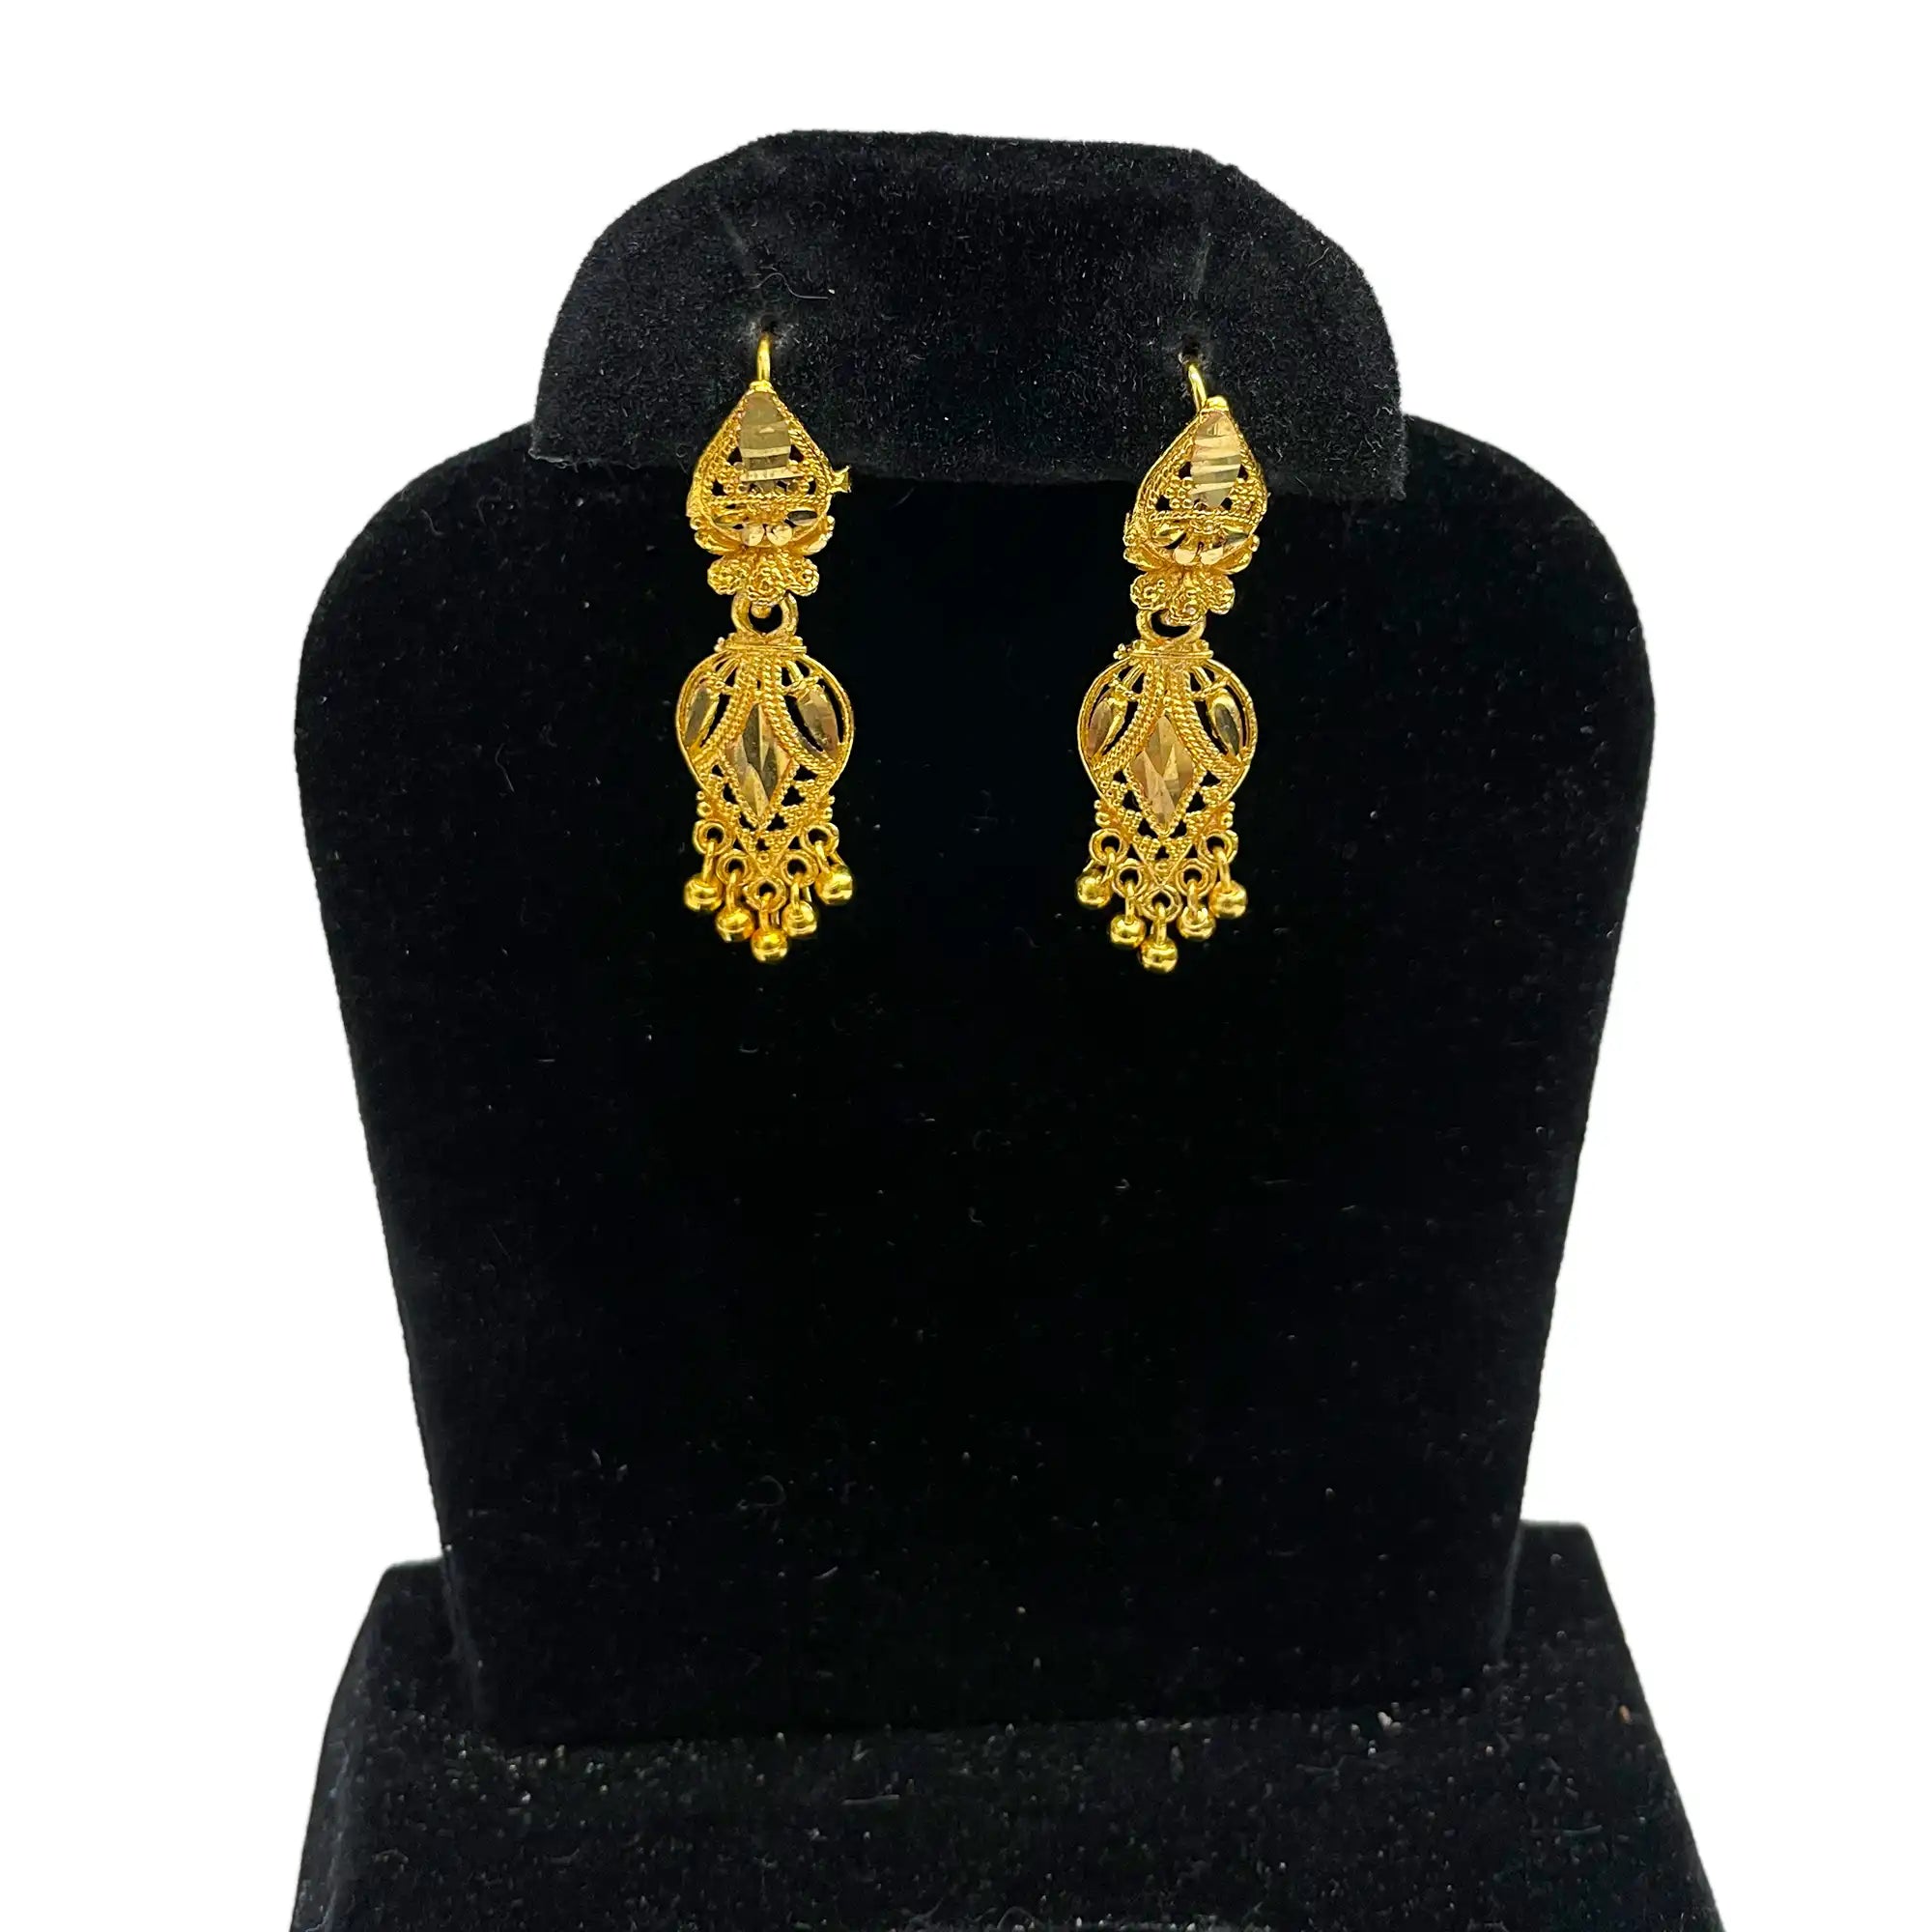 ethinic earrings, gold plating, bollyeood earings, handcrafted earrings